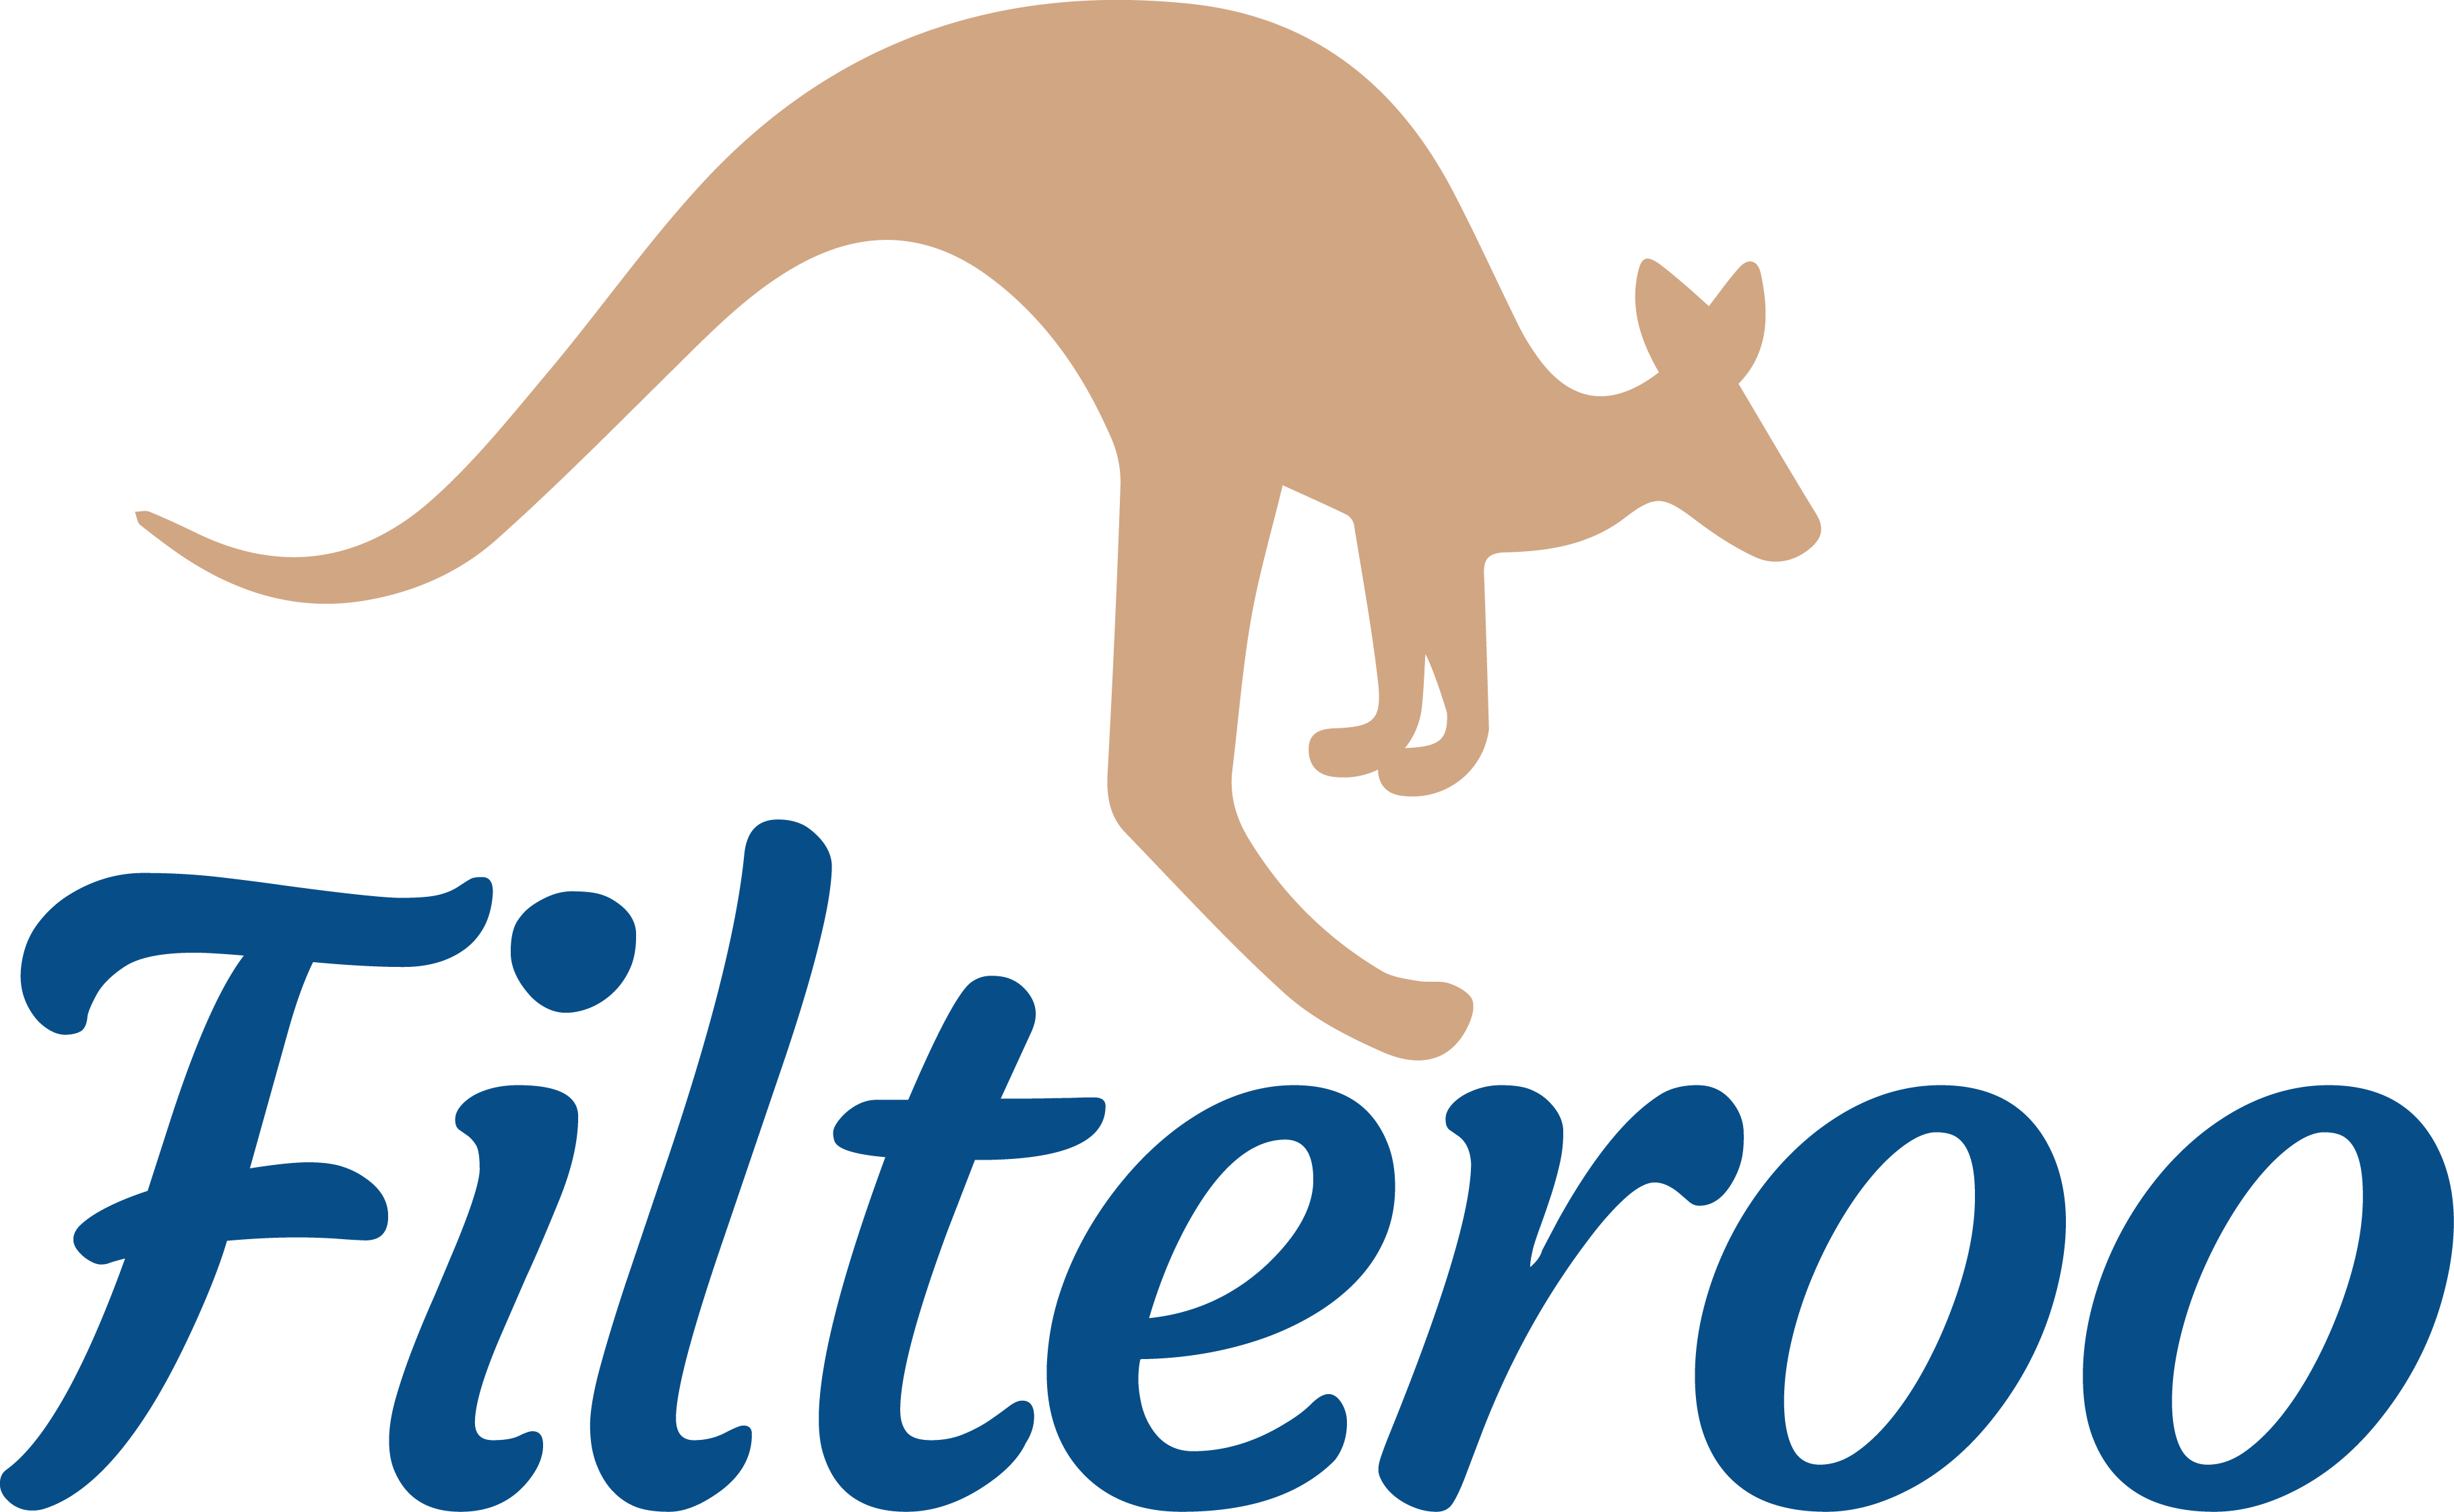 Filteroo Logo